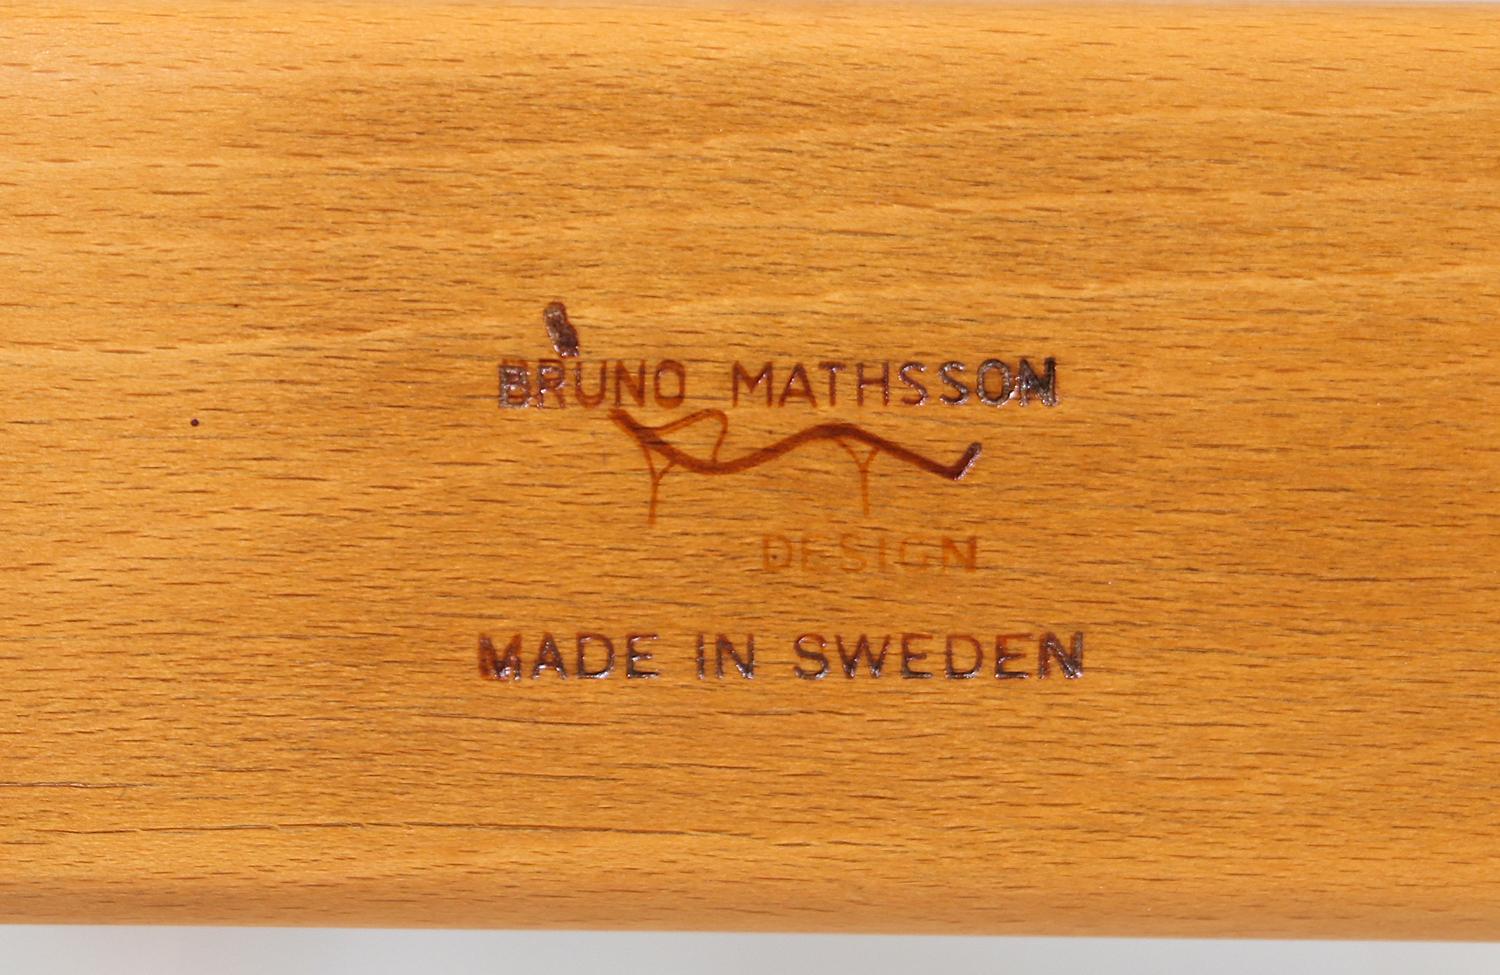 Bruno Mathsson 